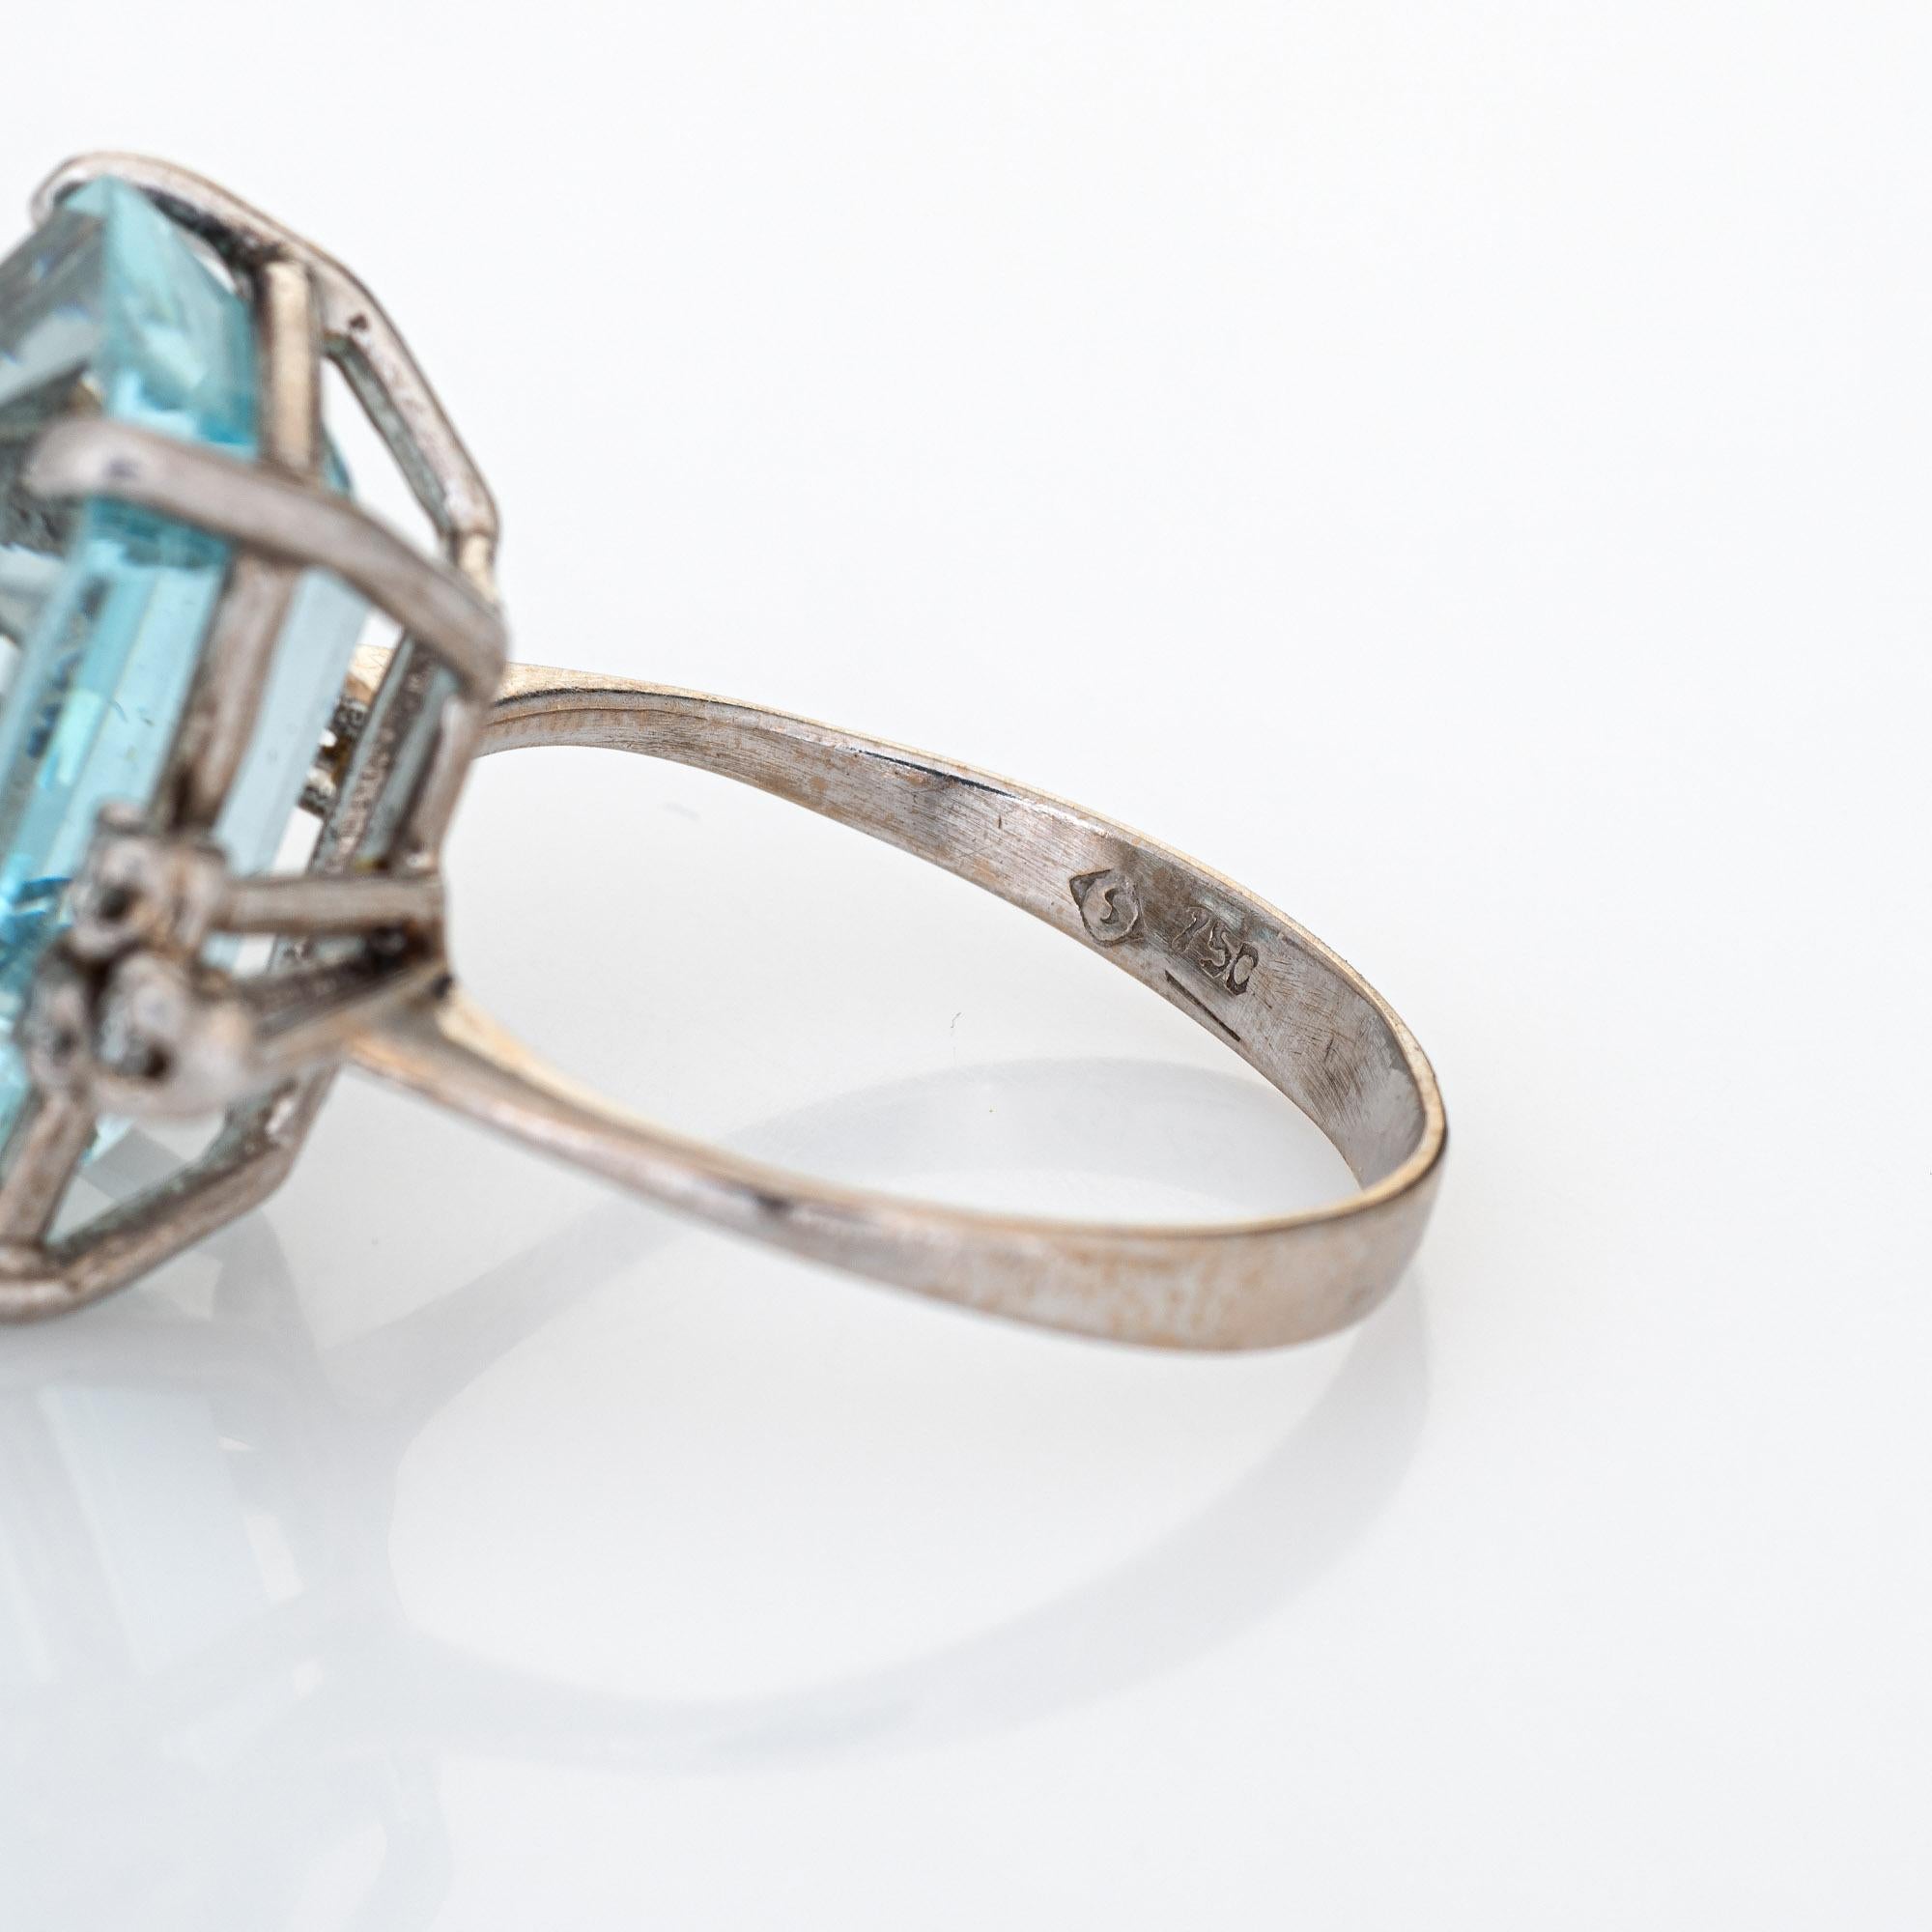 Emerald Cut H Stern 13ct Aquamarine Ring Vintage 18k White Gold Fine Jewelry Brazil